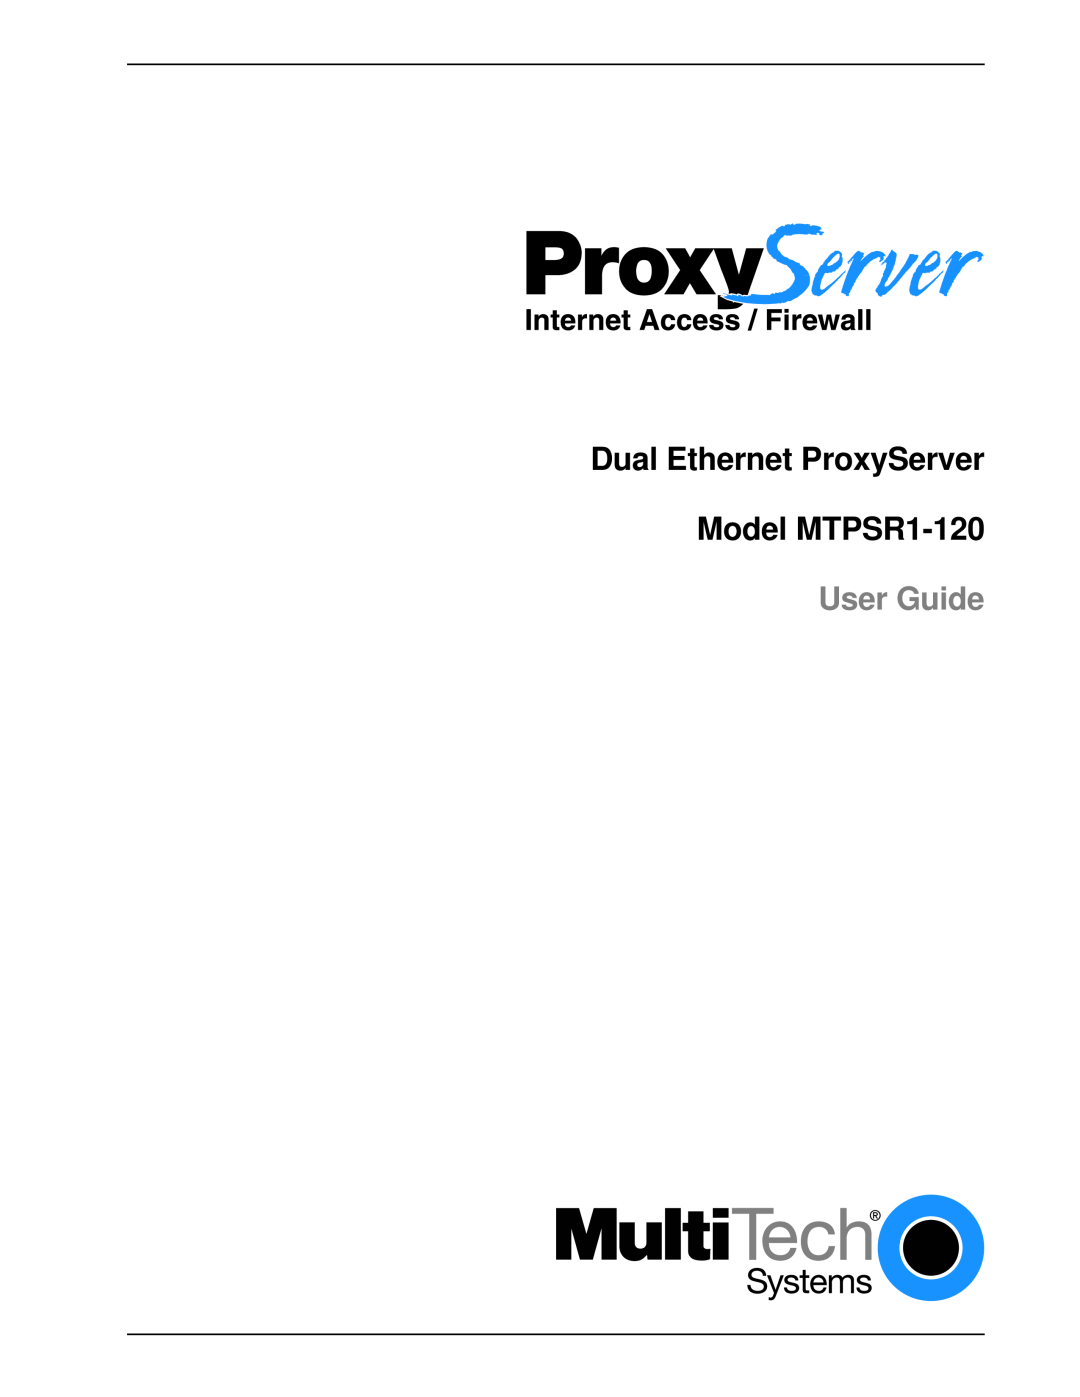 Multitech manual Dual Ethernet ProxyServer Model MTPSR1-120, User Guide 